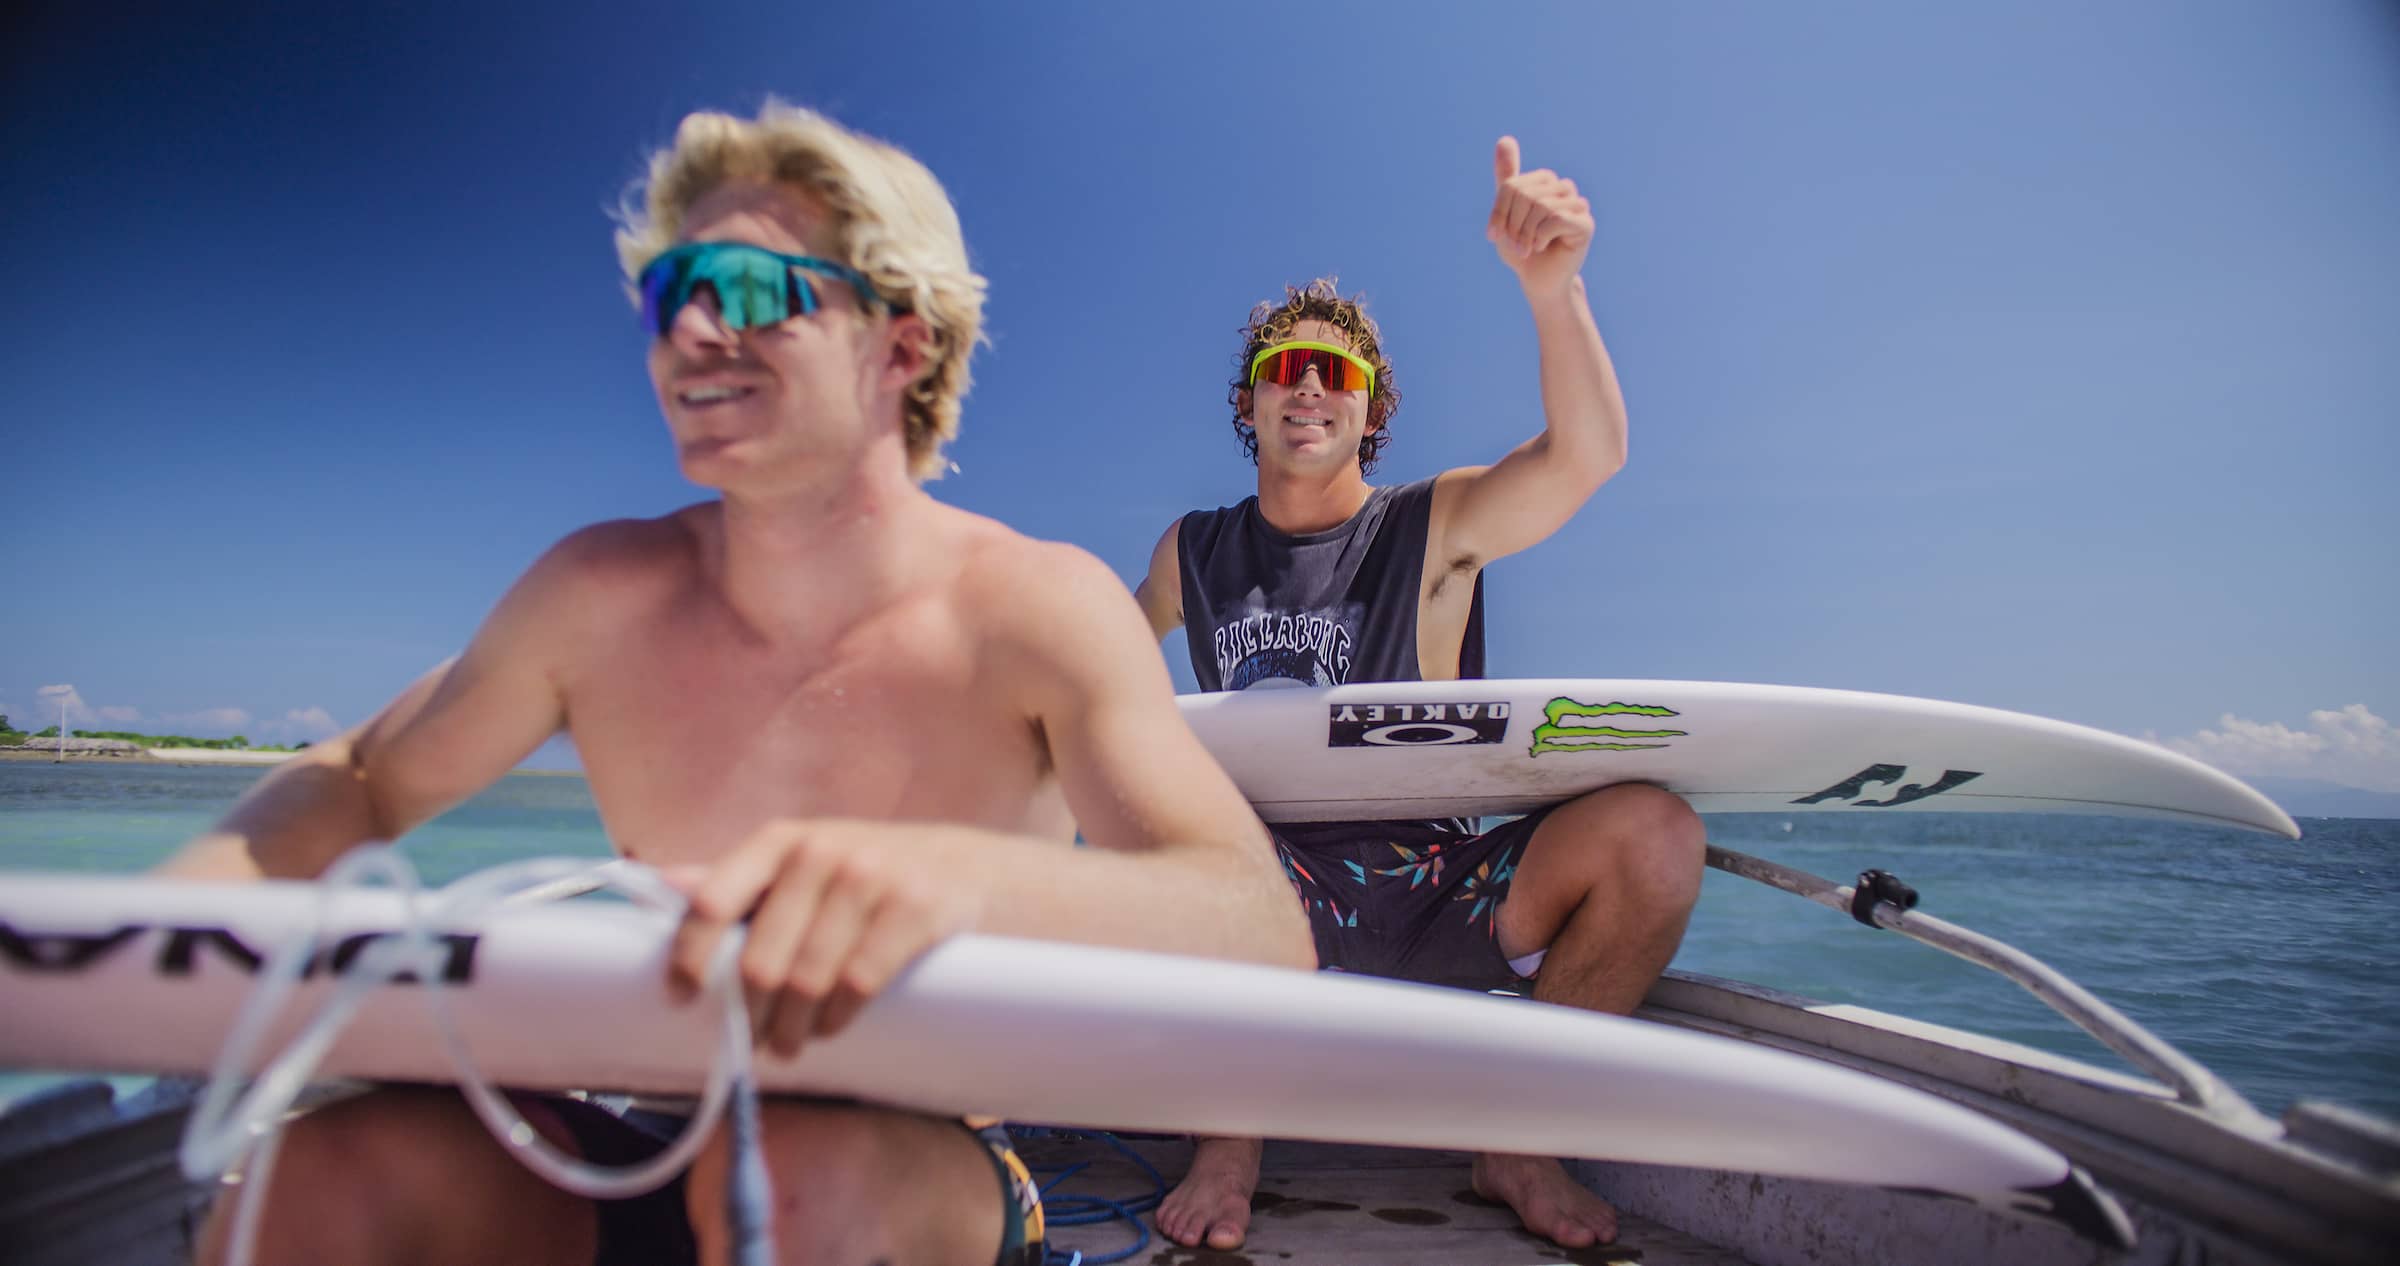 Young people wearing oakley hydra sunglasses on speedboat